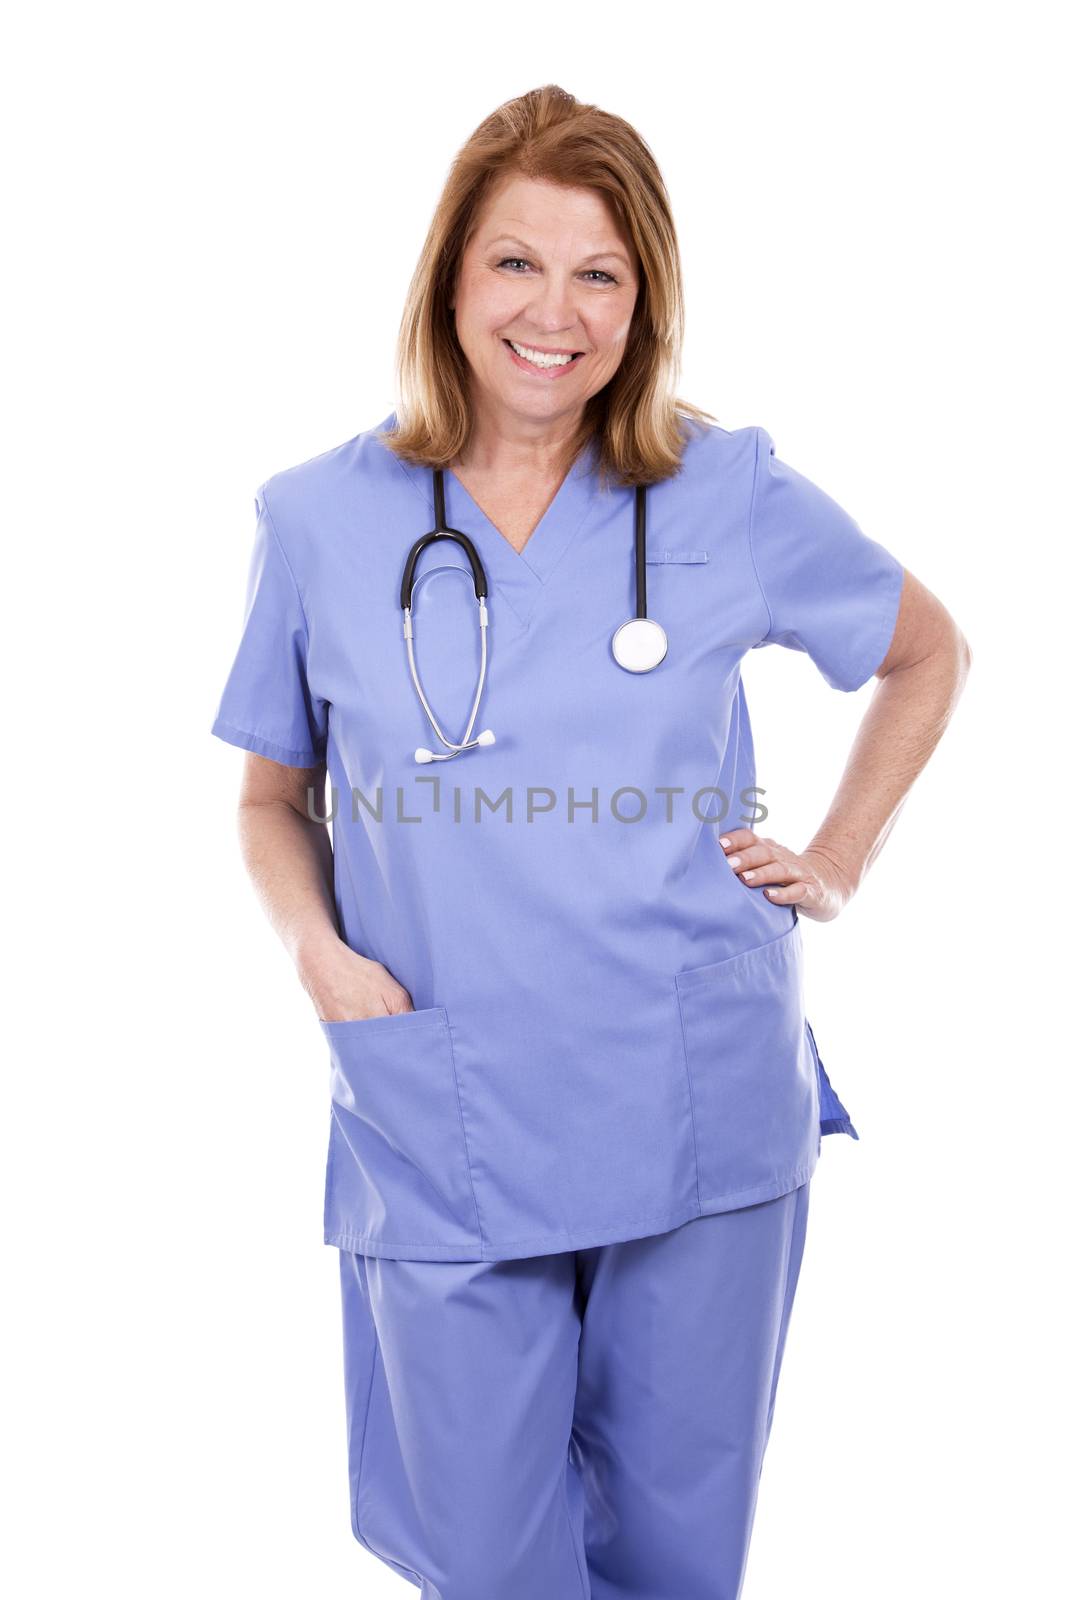 middle aged female doctor by zdenkadarula